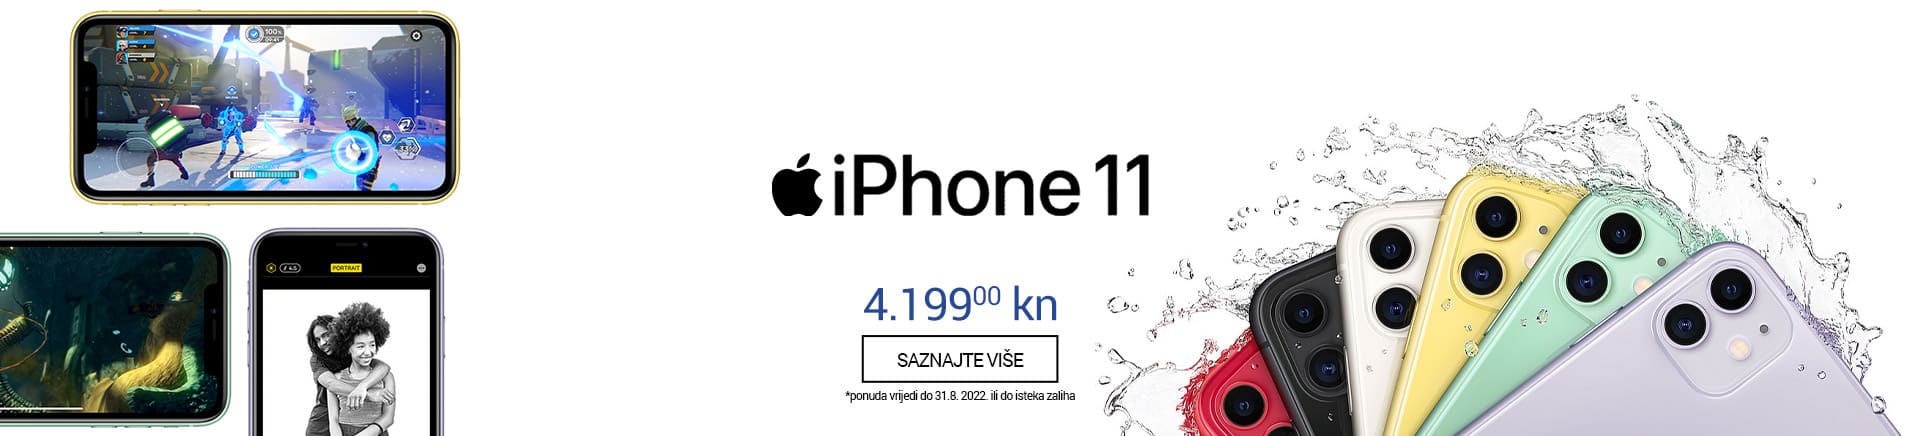 iPhone 11 već od 4.199 kn